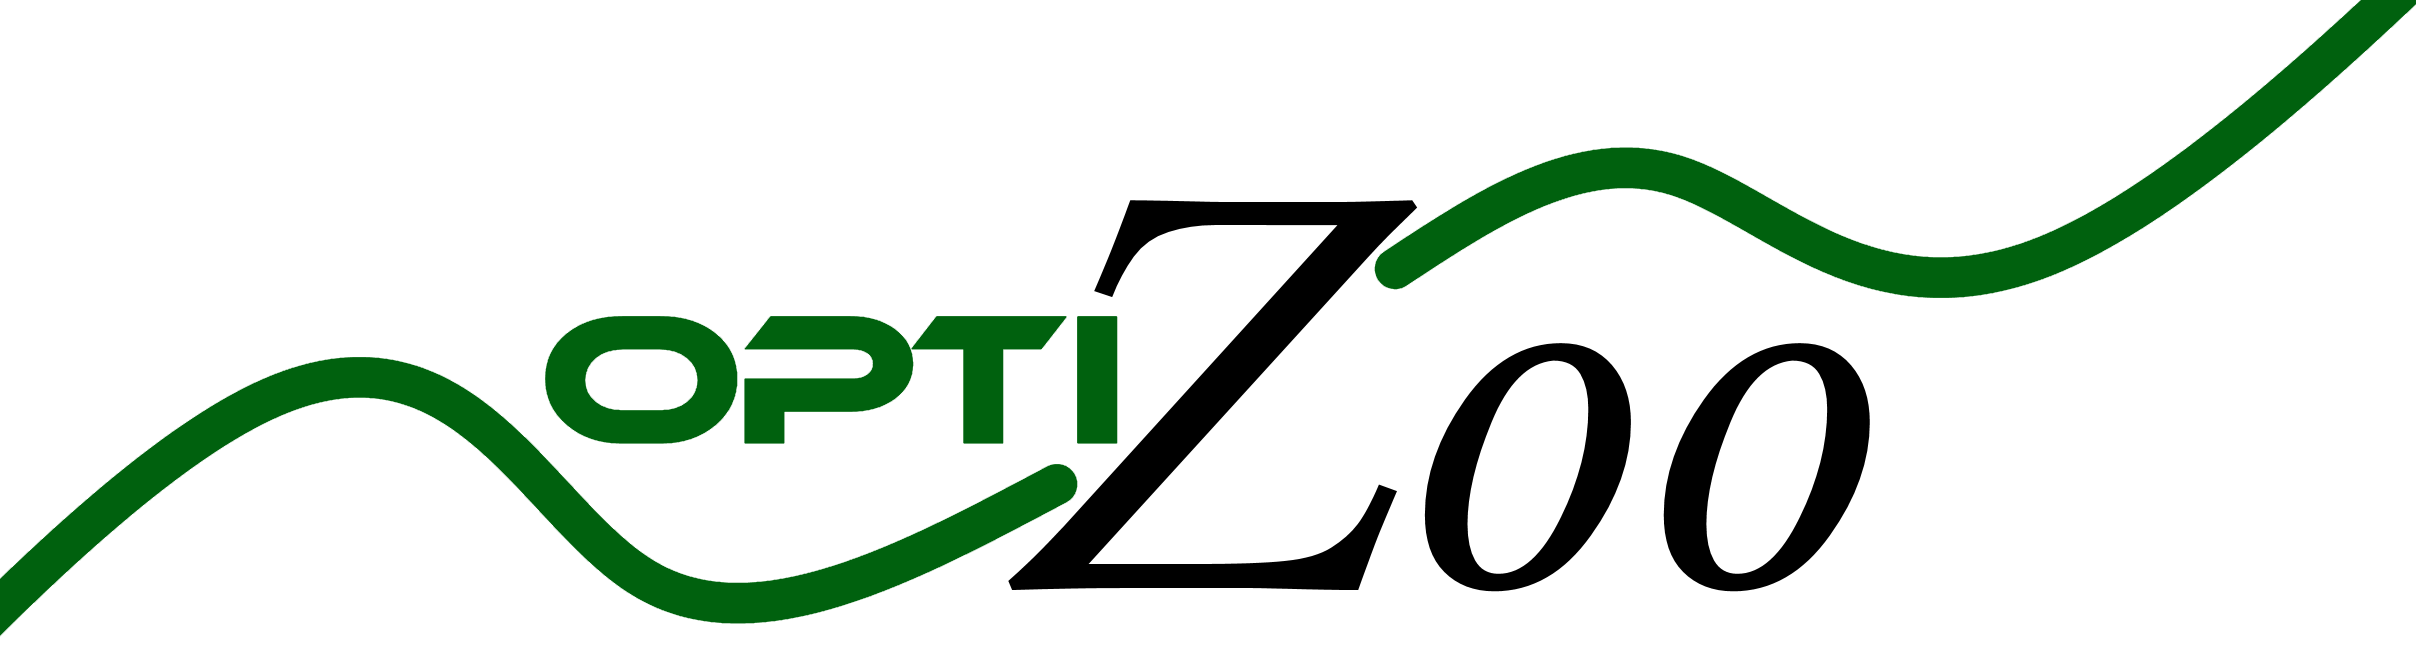 Optizoo Zoofachhandel Management